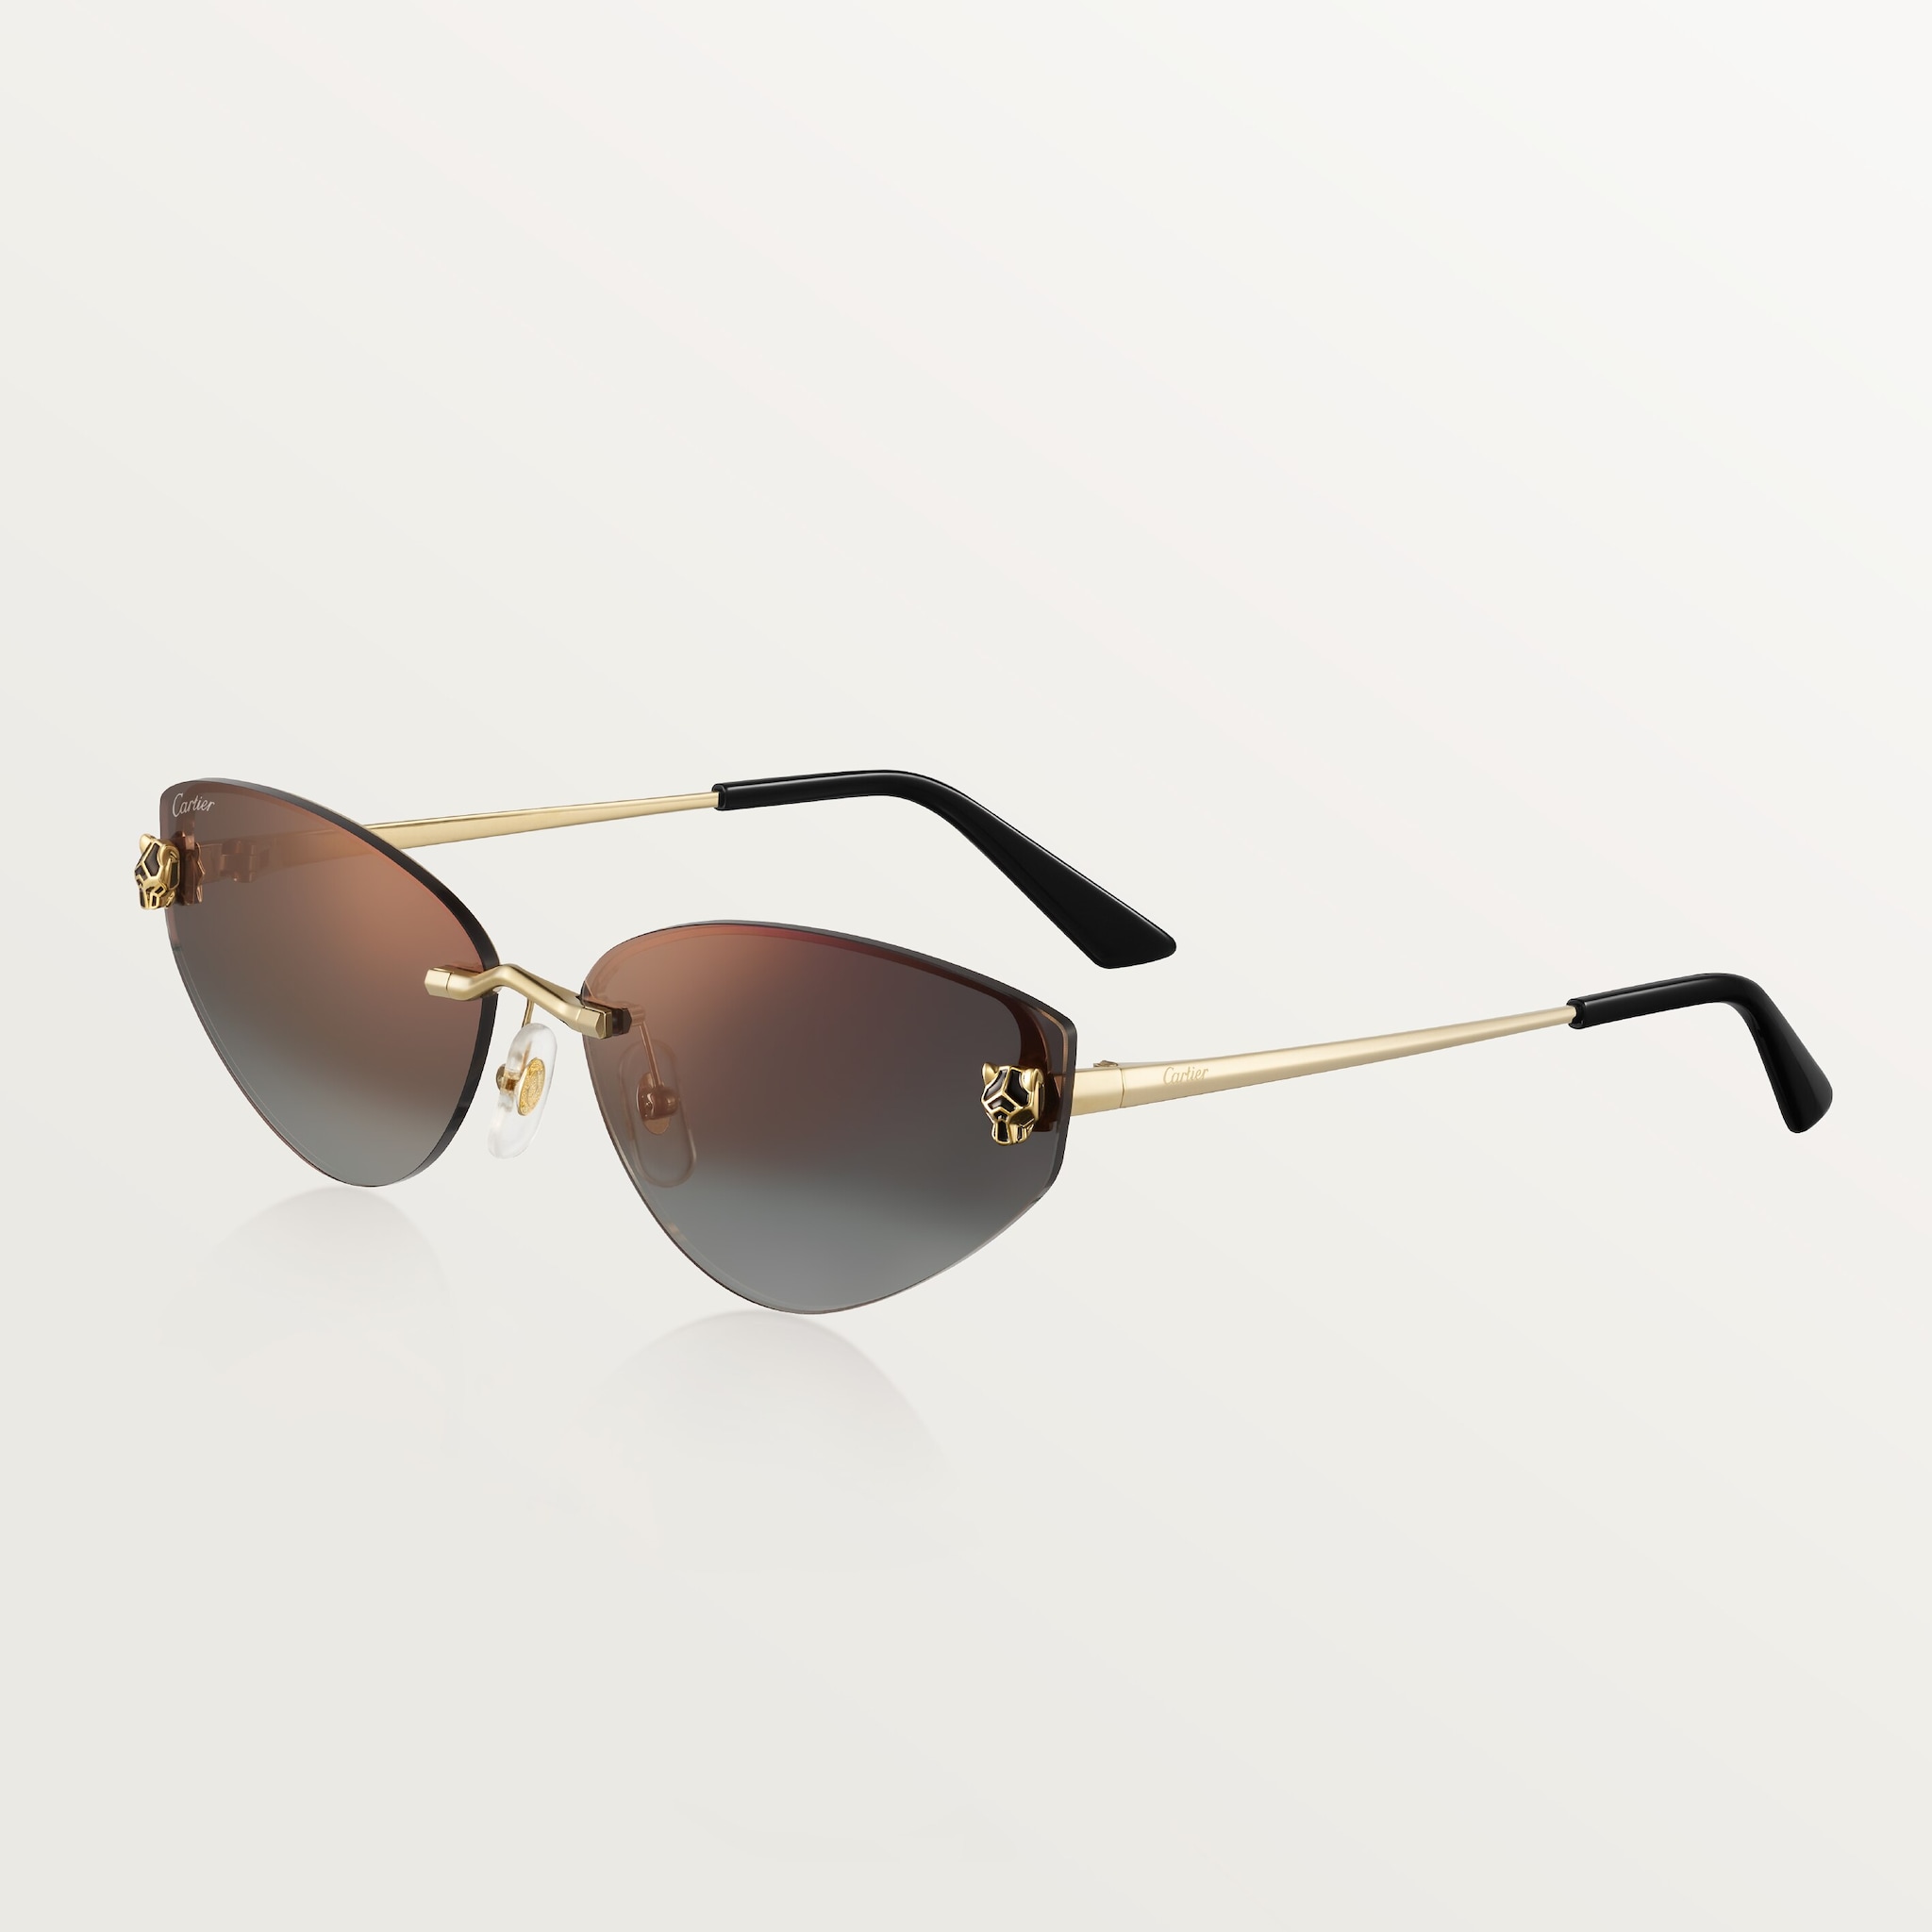 Panthère de Cartier sunglassesSmooth golden-finish metal, graduated grey lenses